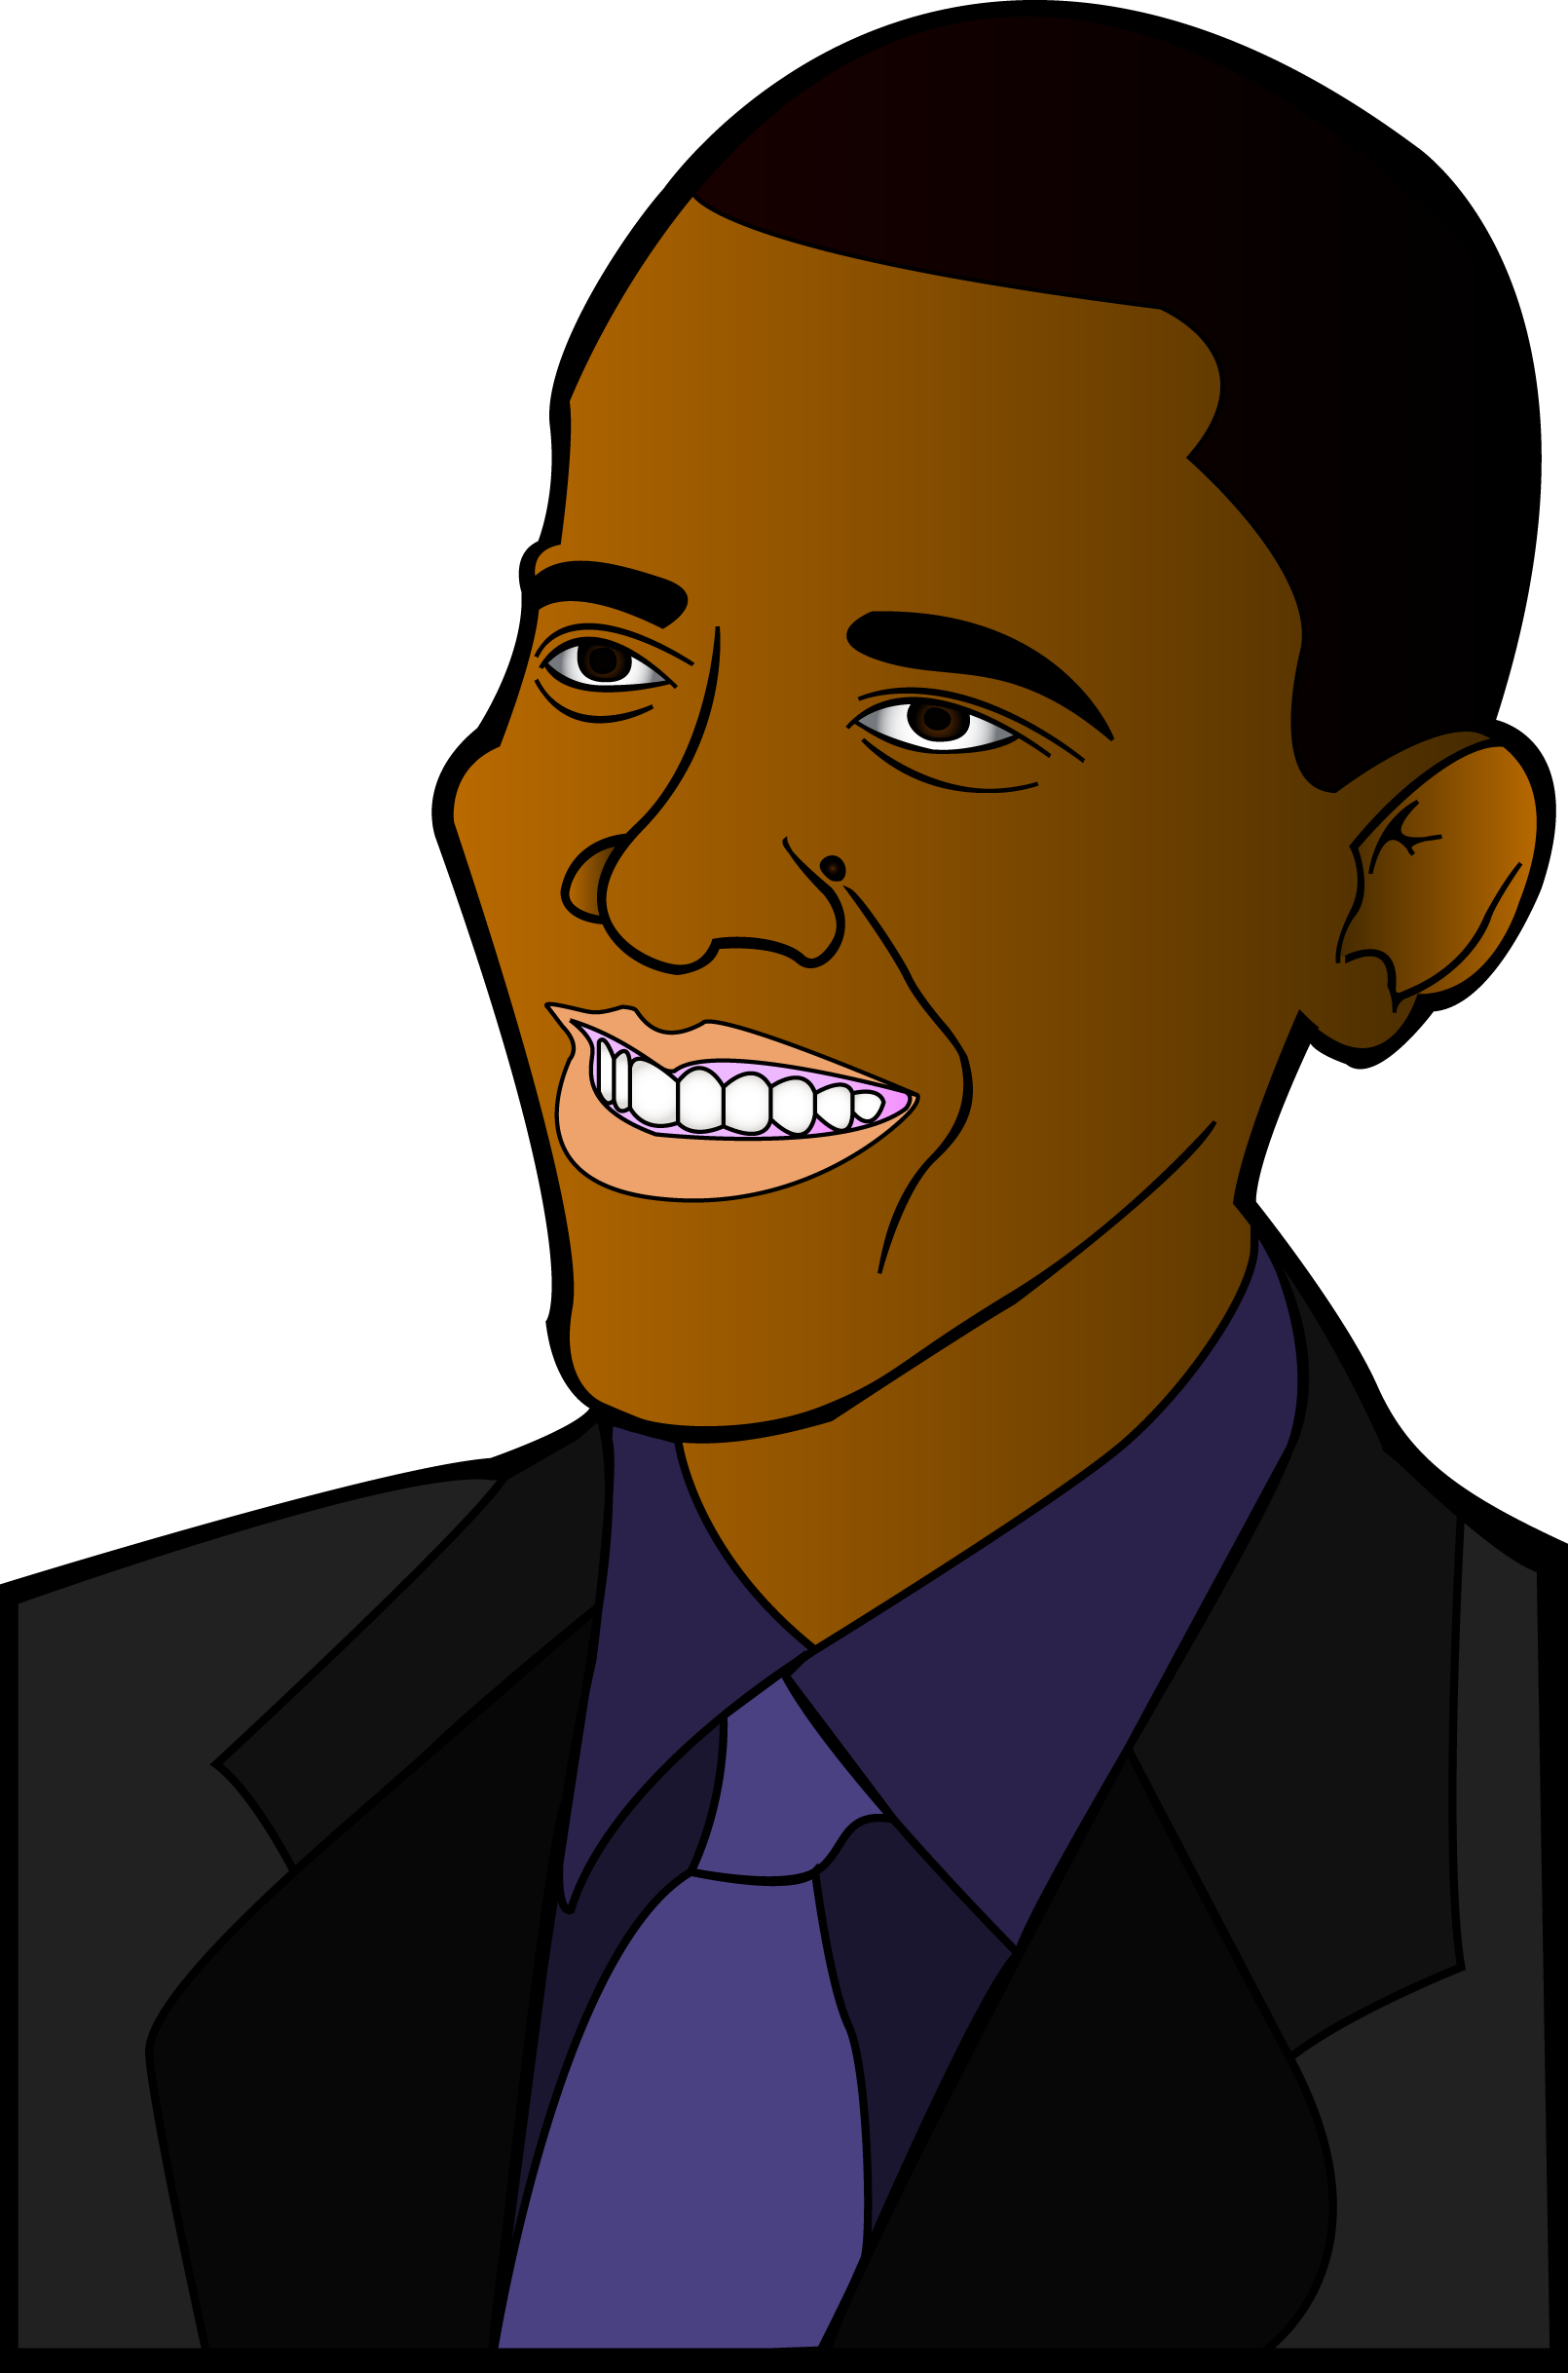 A Cartoon Of A Man Smiling